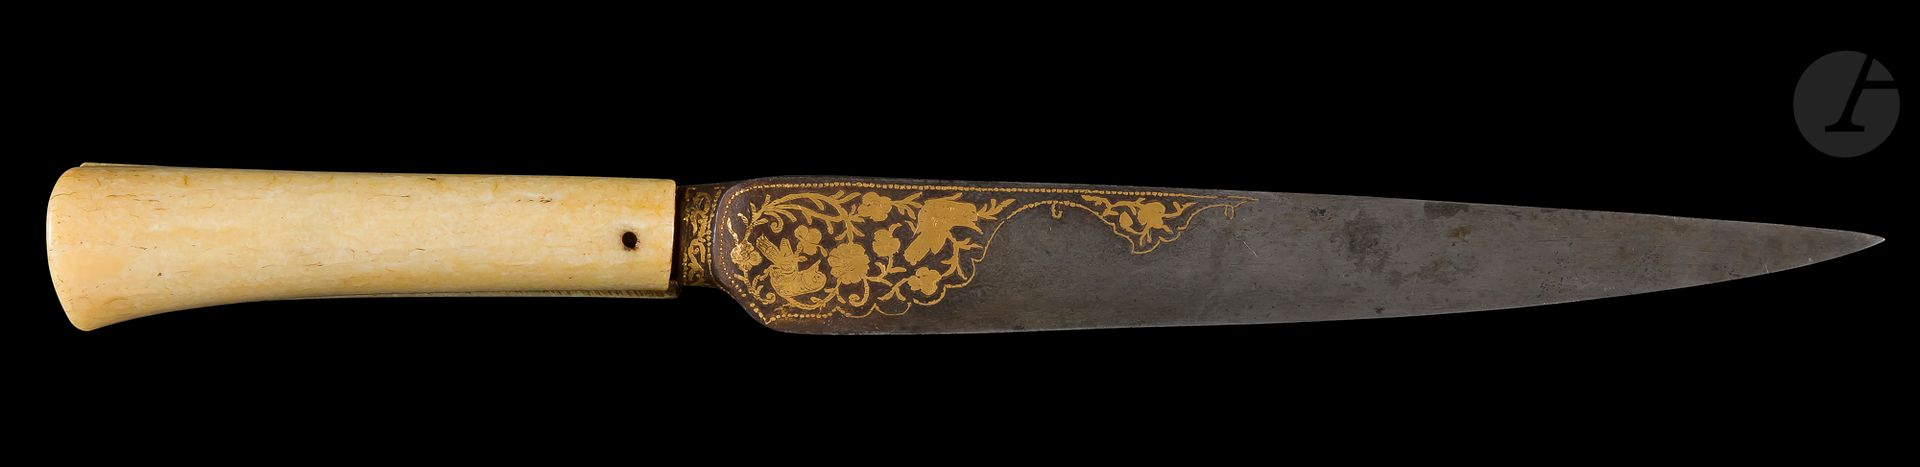 Null 卡德匕首，印度或伊朗qâjâr，19世纪
大马士革钢单刃直刀，刀跟刻有黄金镶嵌的花鸟图案。平坦的背上有一个山脊，长椅上镶嵌着黄金。手柄由金属丝制成，两&hellip;